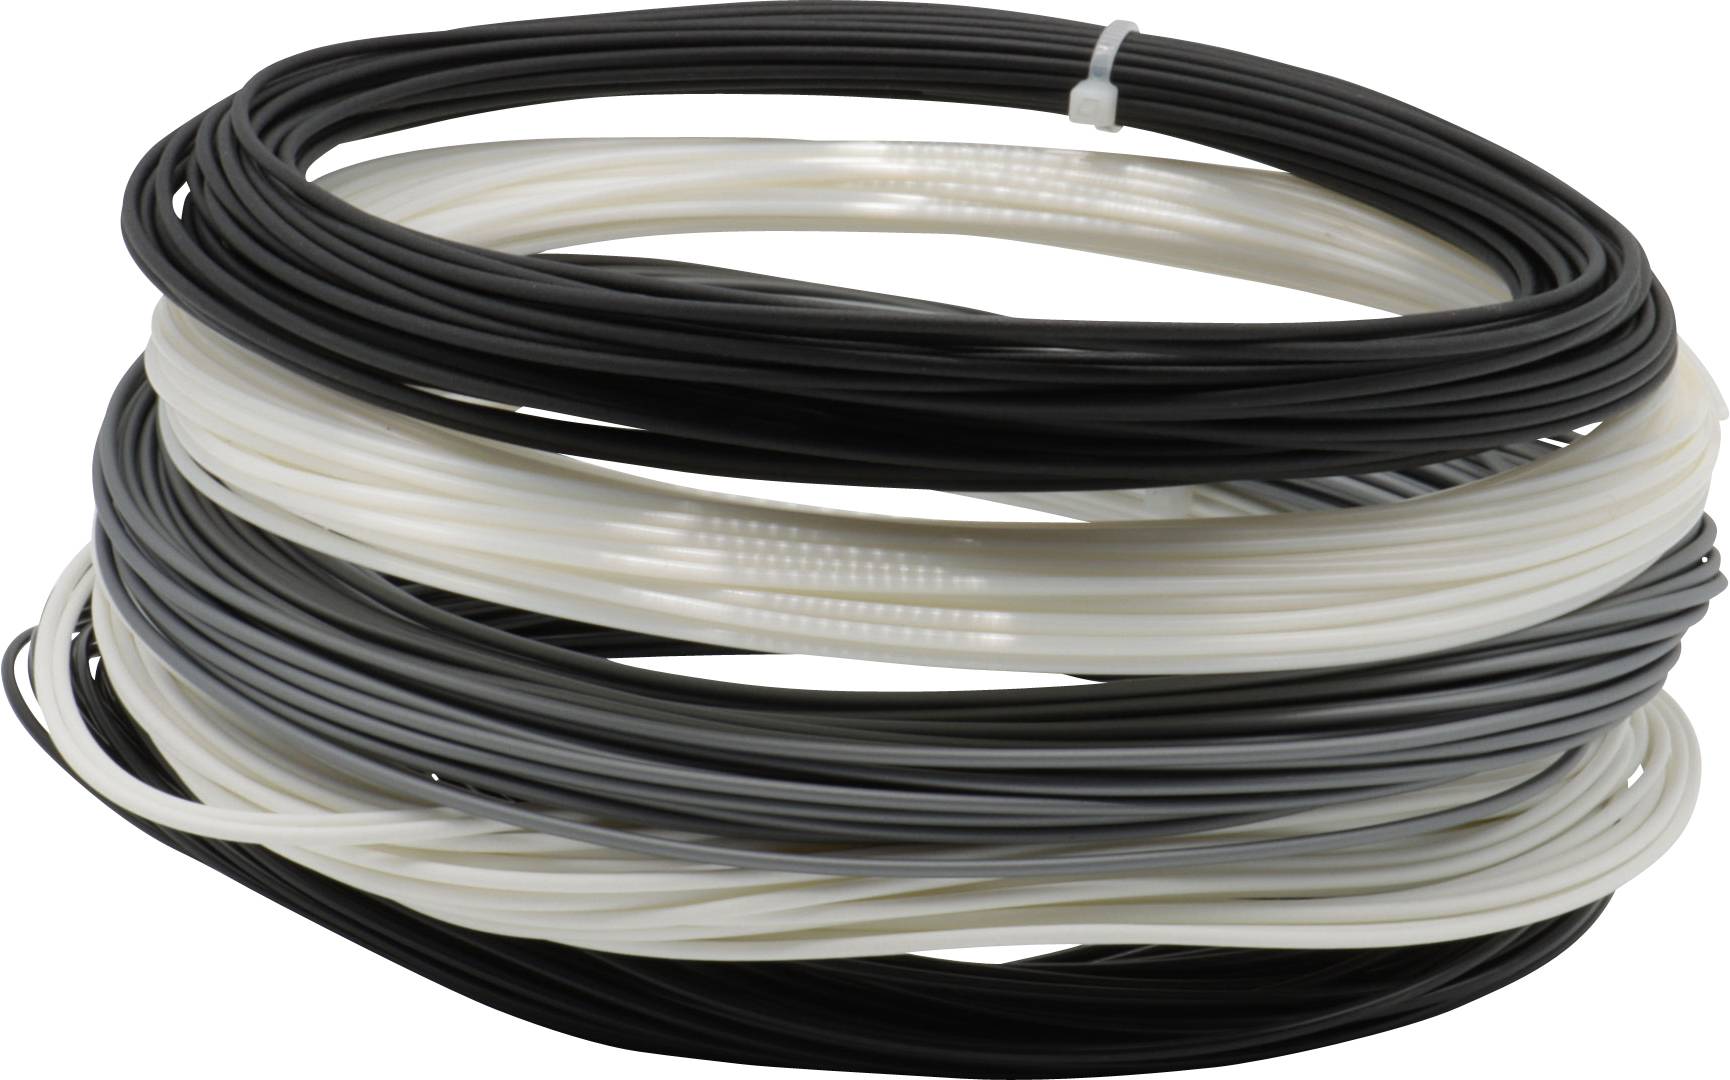 CONRAD Renkforce RF-4738598 Filament PLA 1.75 mm 250 g Silber, Seidenweiß, Weiß (matt), Schwarz (K